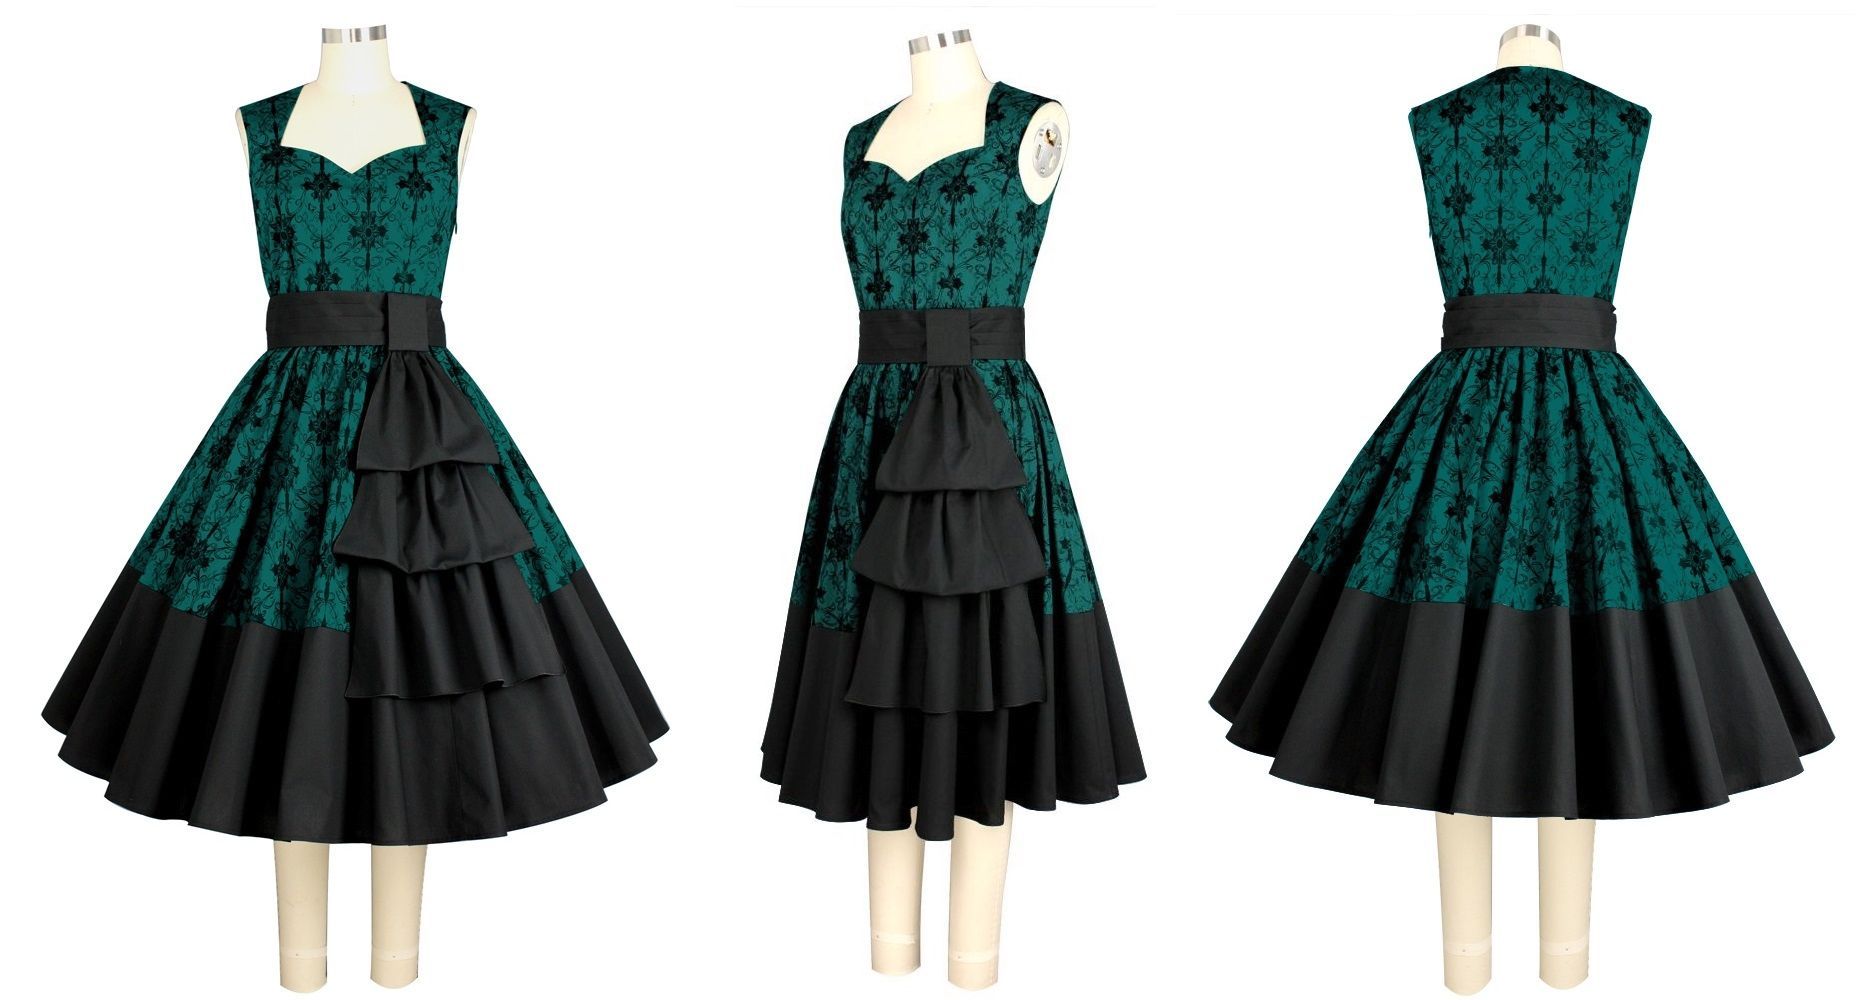 Rockabilly šaty dámské Emerald Shadow